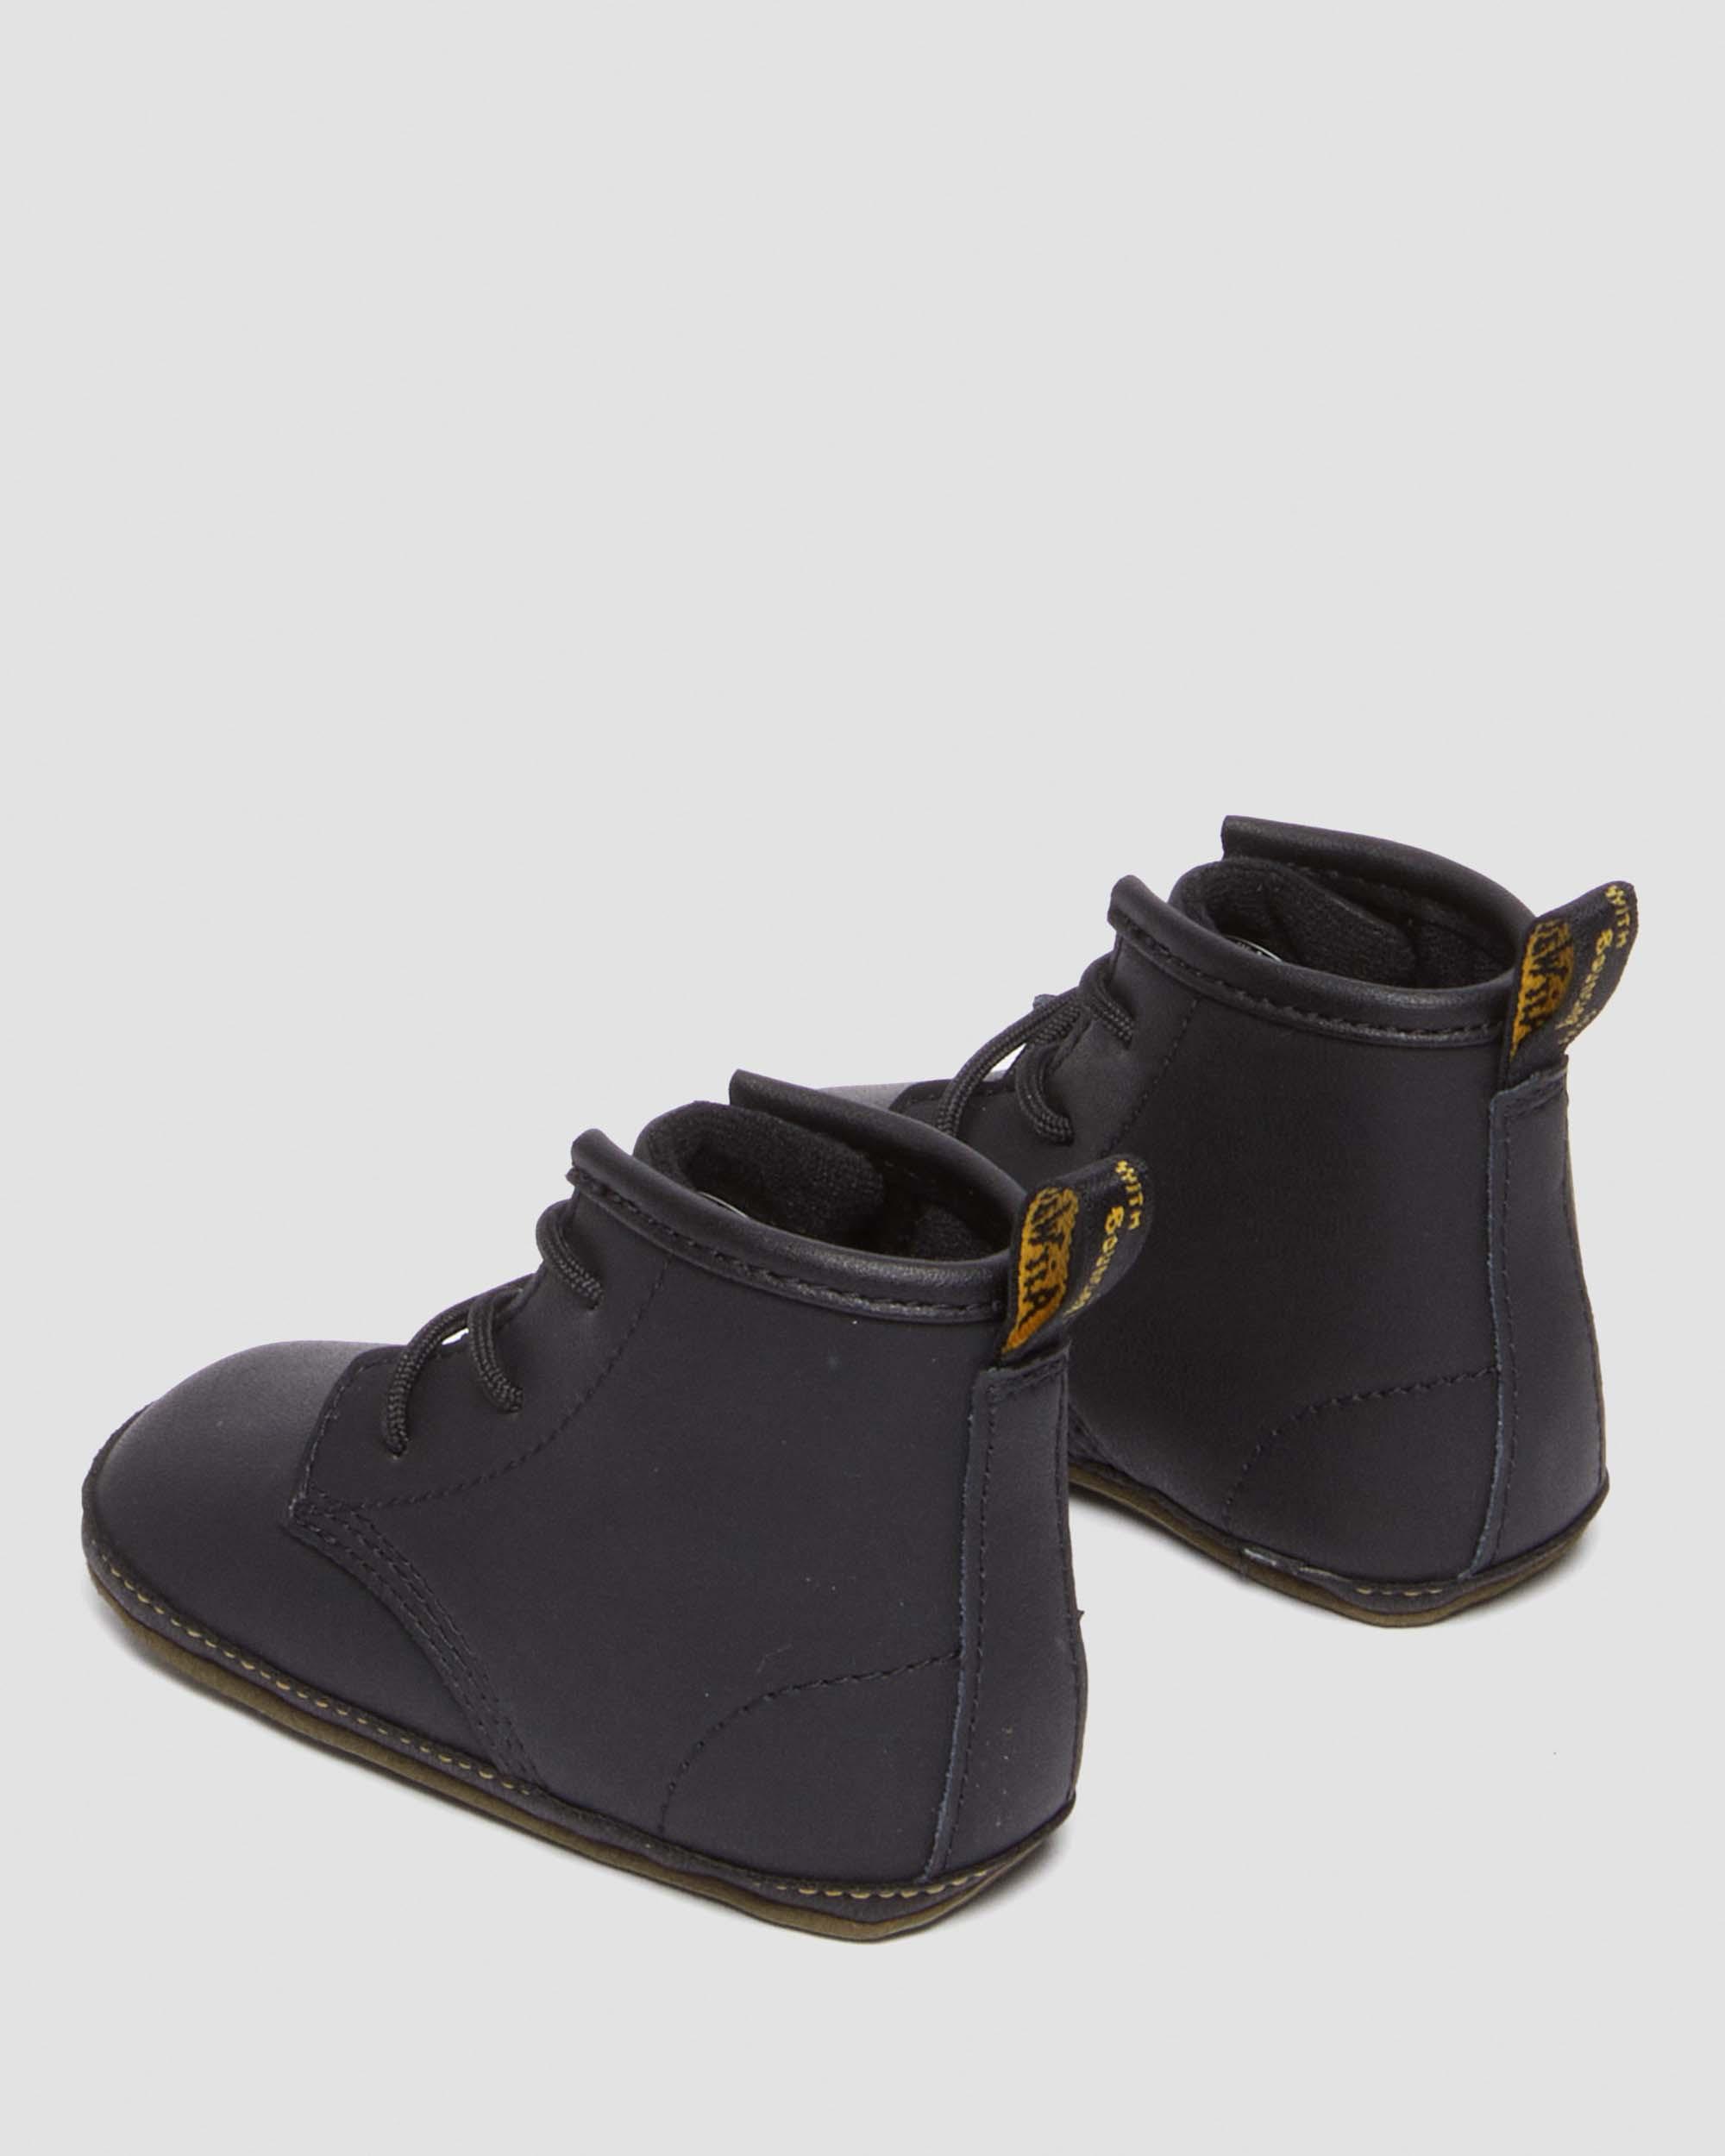 Newborn 1460 Auburn Leather Booties in Black